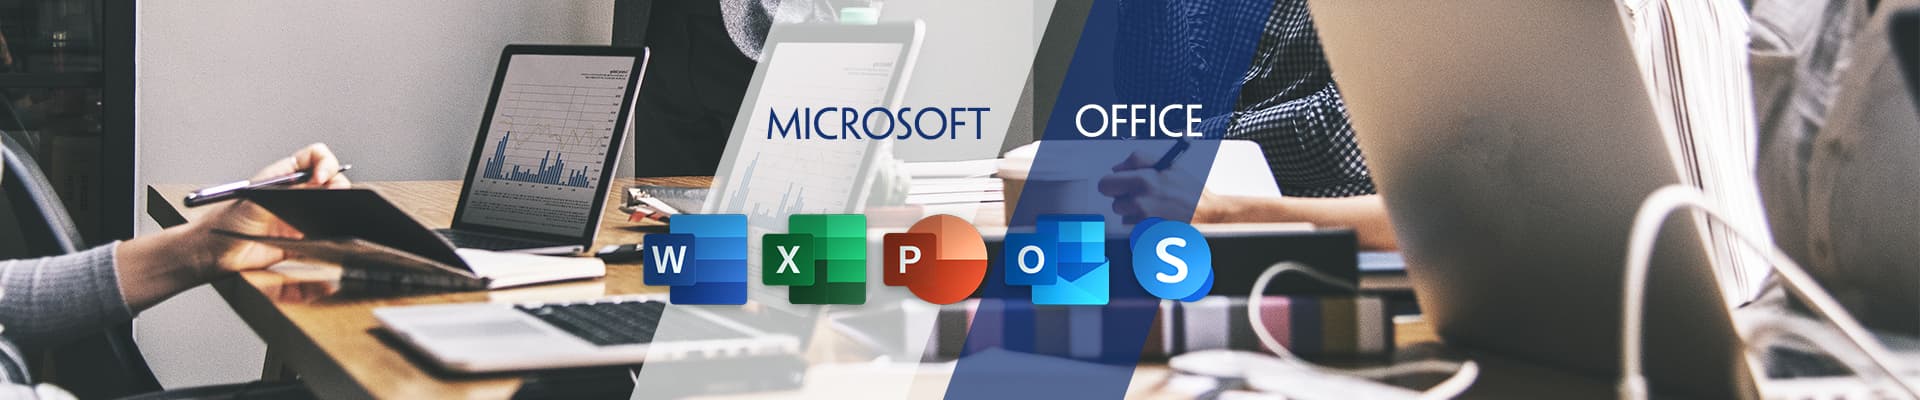 Học sử dụng bộ Office: Word, Excel, Power Point, Mail chuyên nghiệp